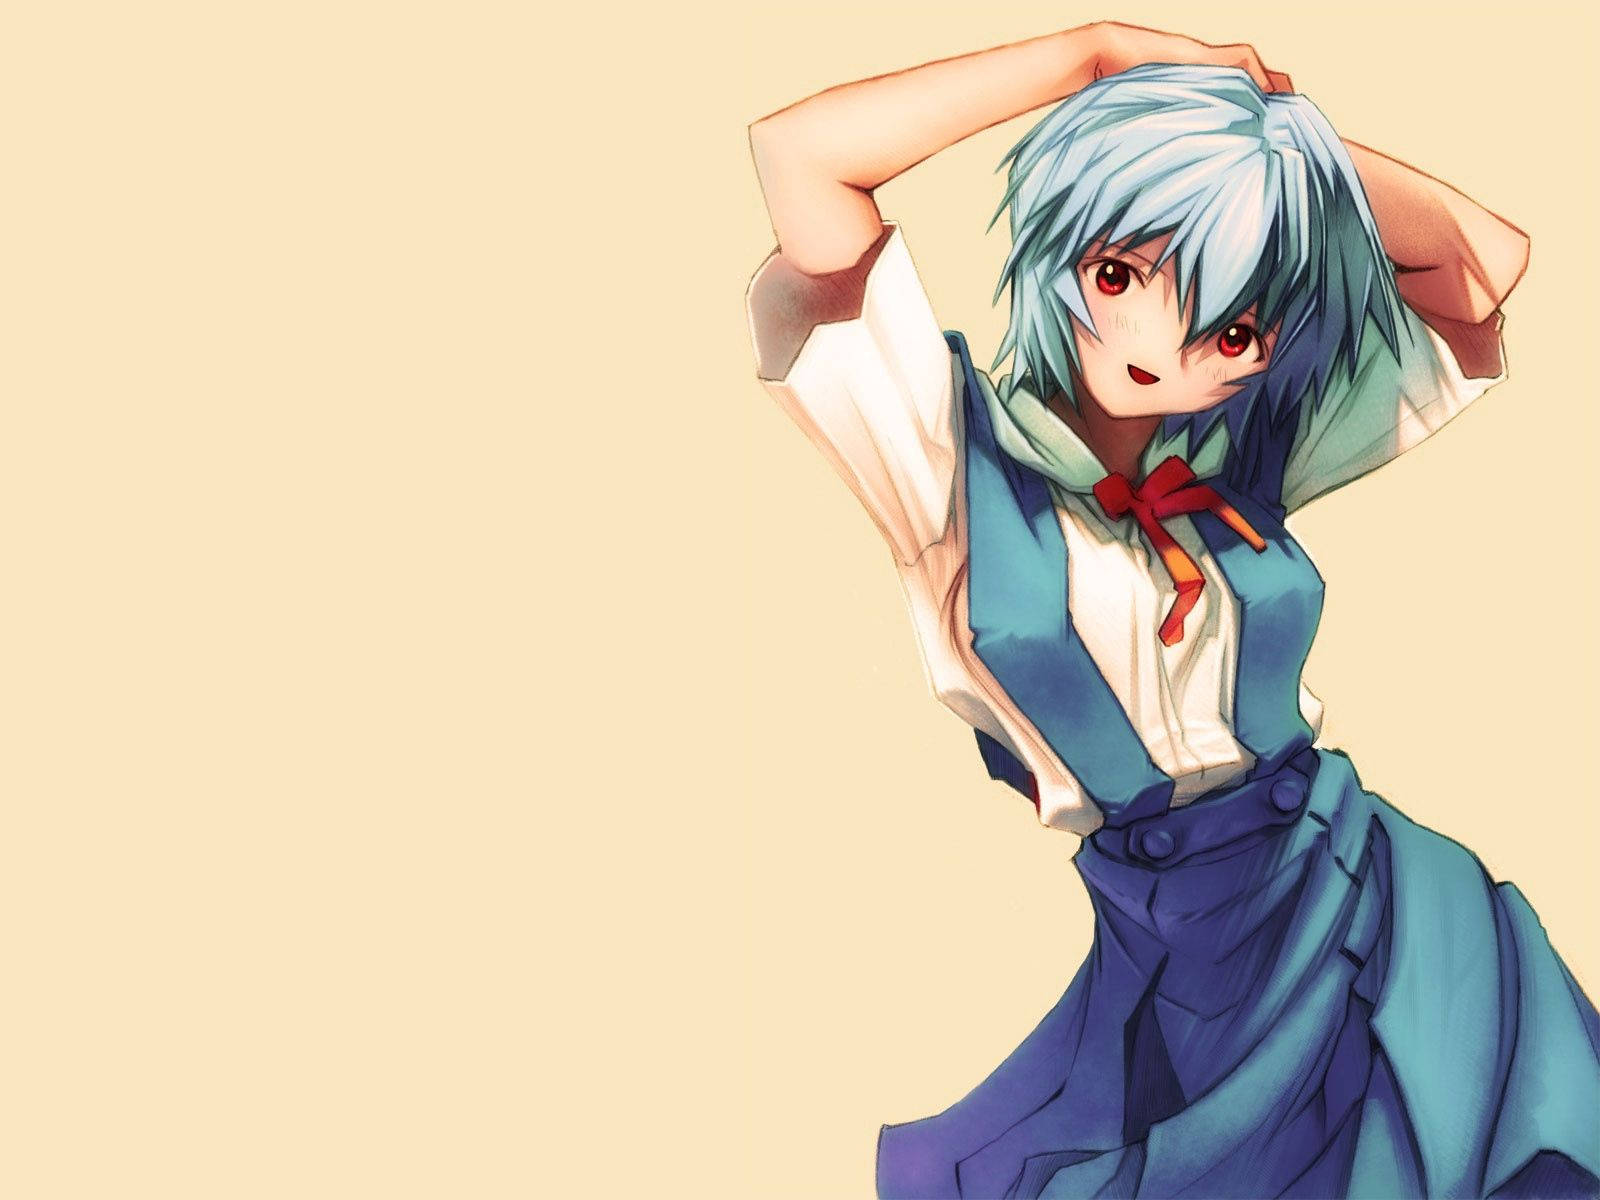 Cute Anime Girl In Blue Uniform